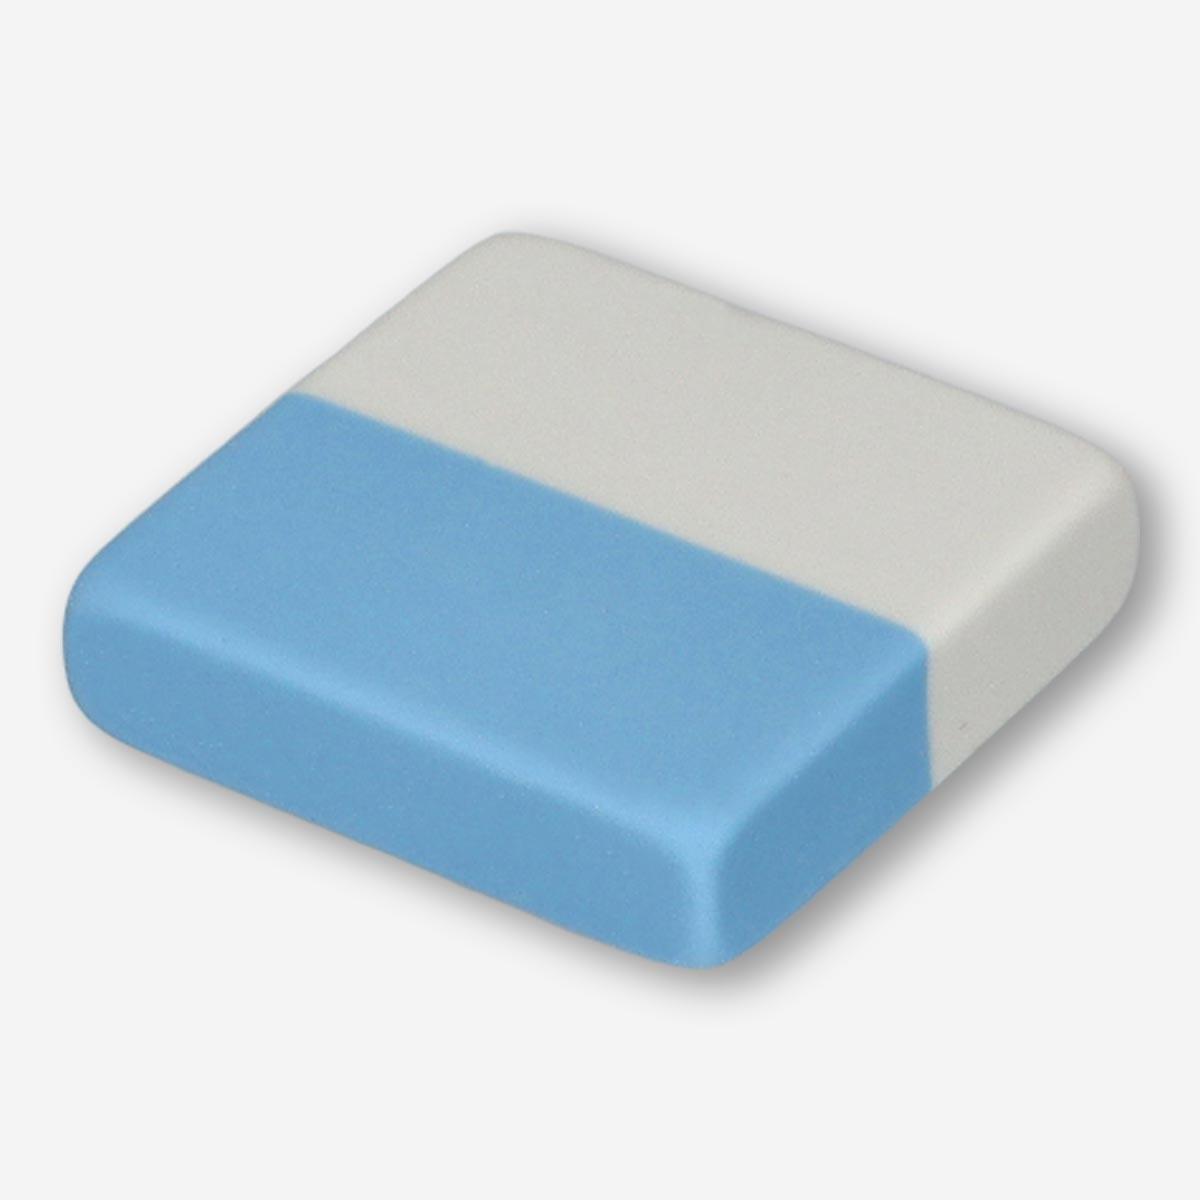 Blue eraser